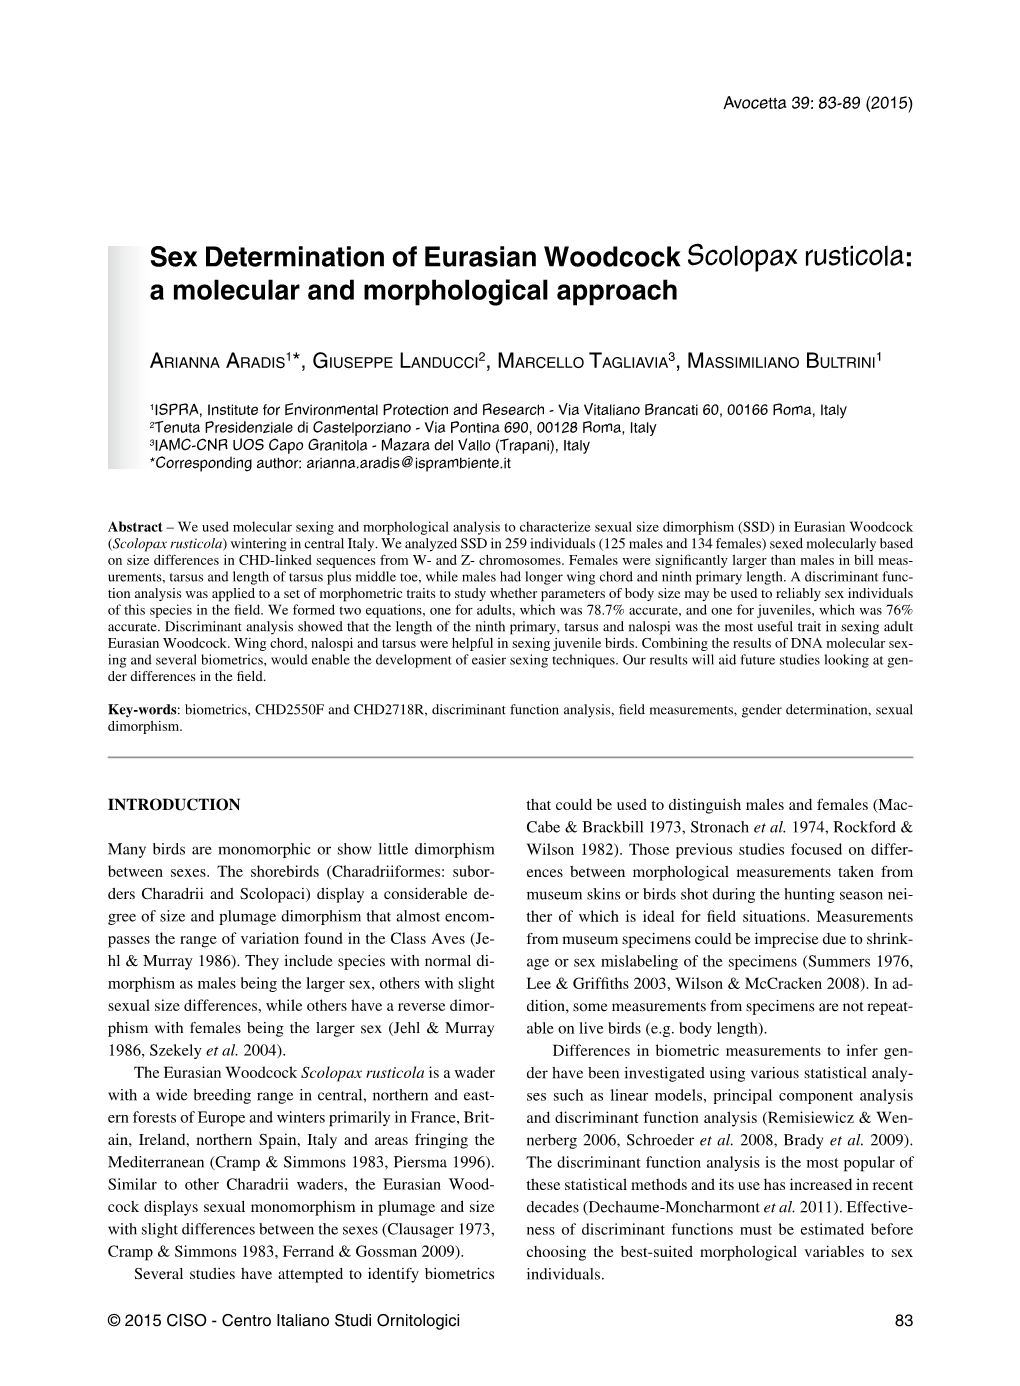 Sex Determination of Eurasian Woodcock Scolopax Rusticola: a Molecular and Morphological Approach